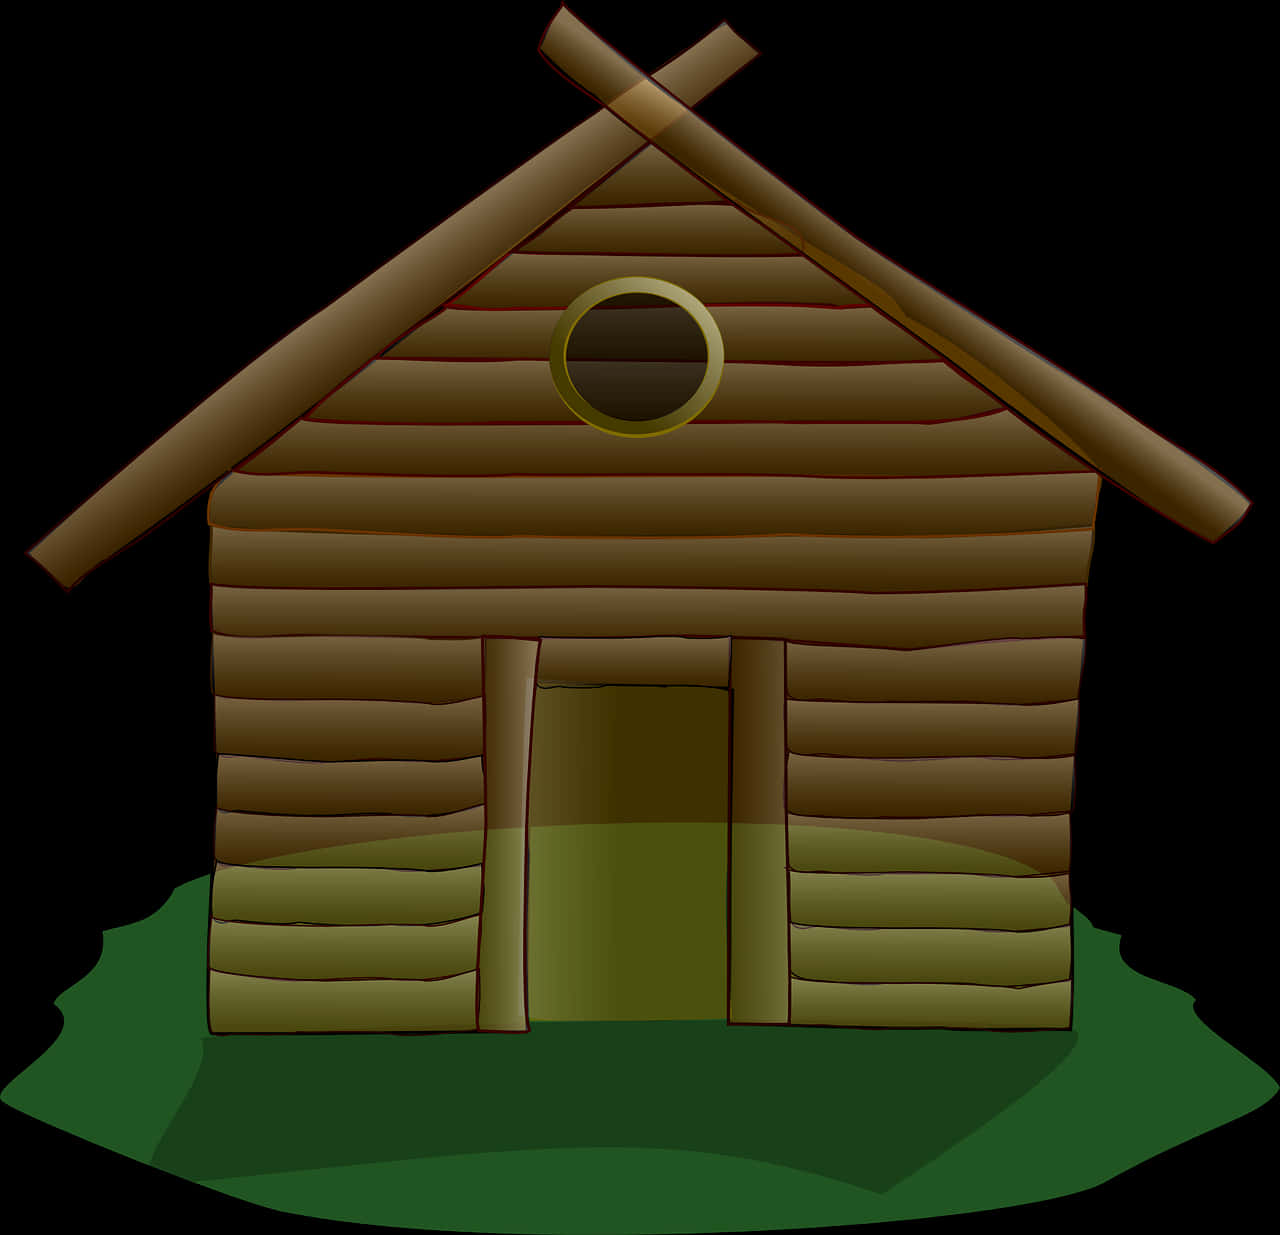 A Cartoon Of A Log Cabin